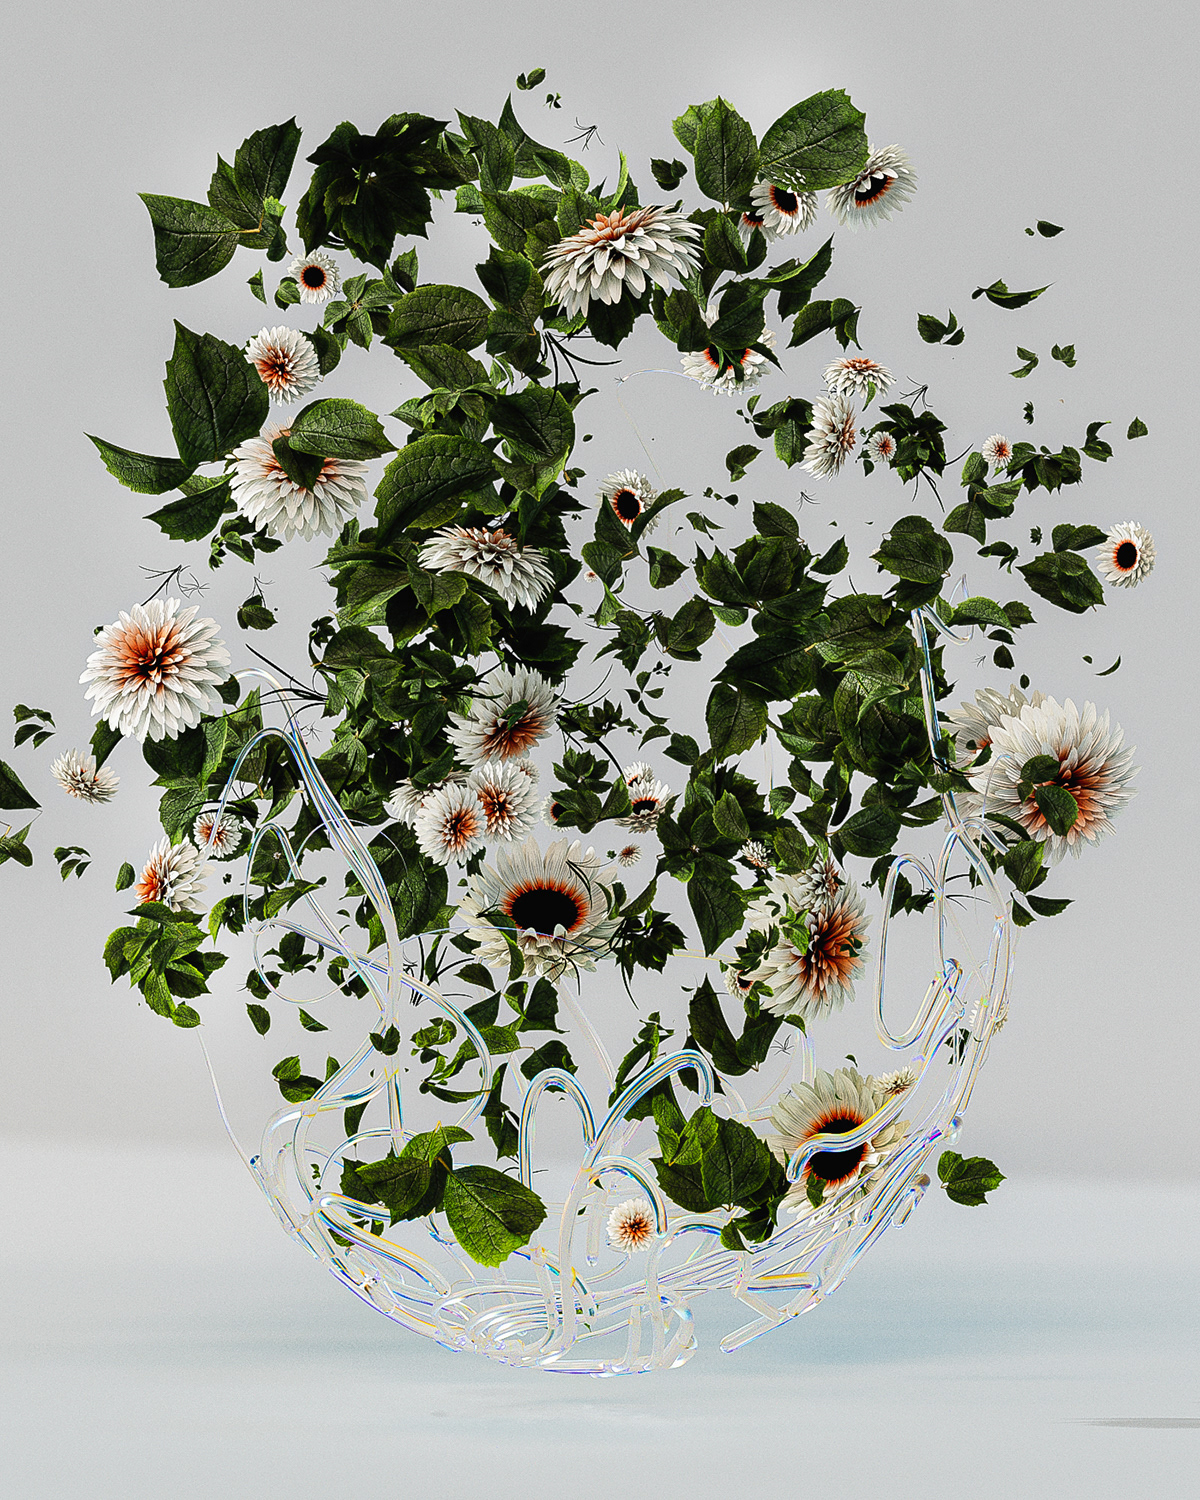 3D abstract cinema 4d concept art Digital Art  digital illustration Flowers garden